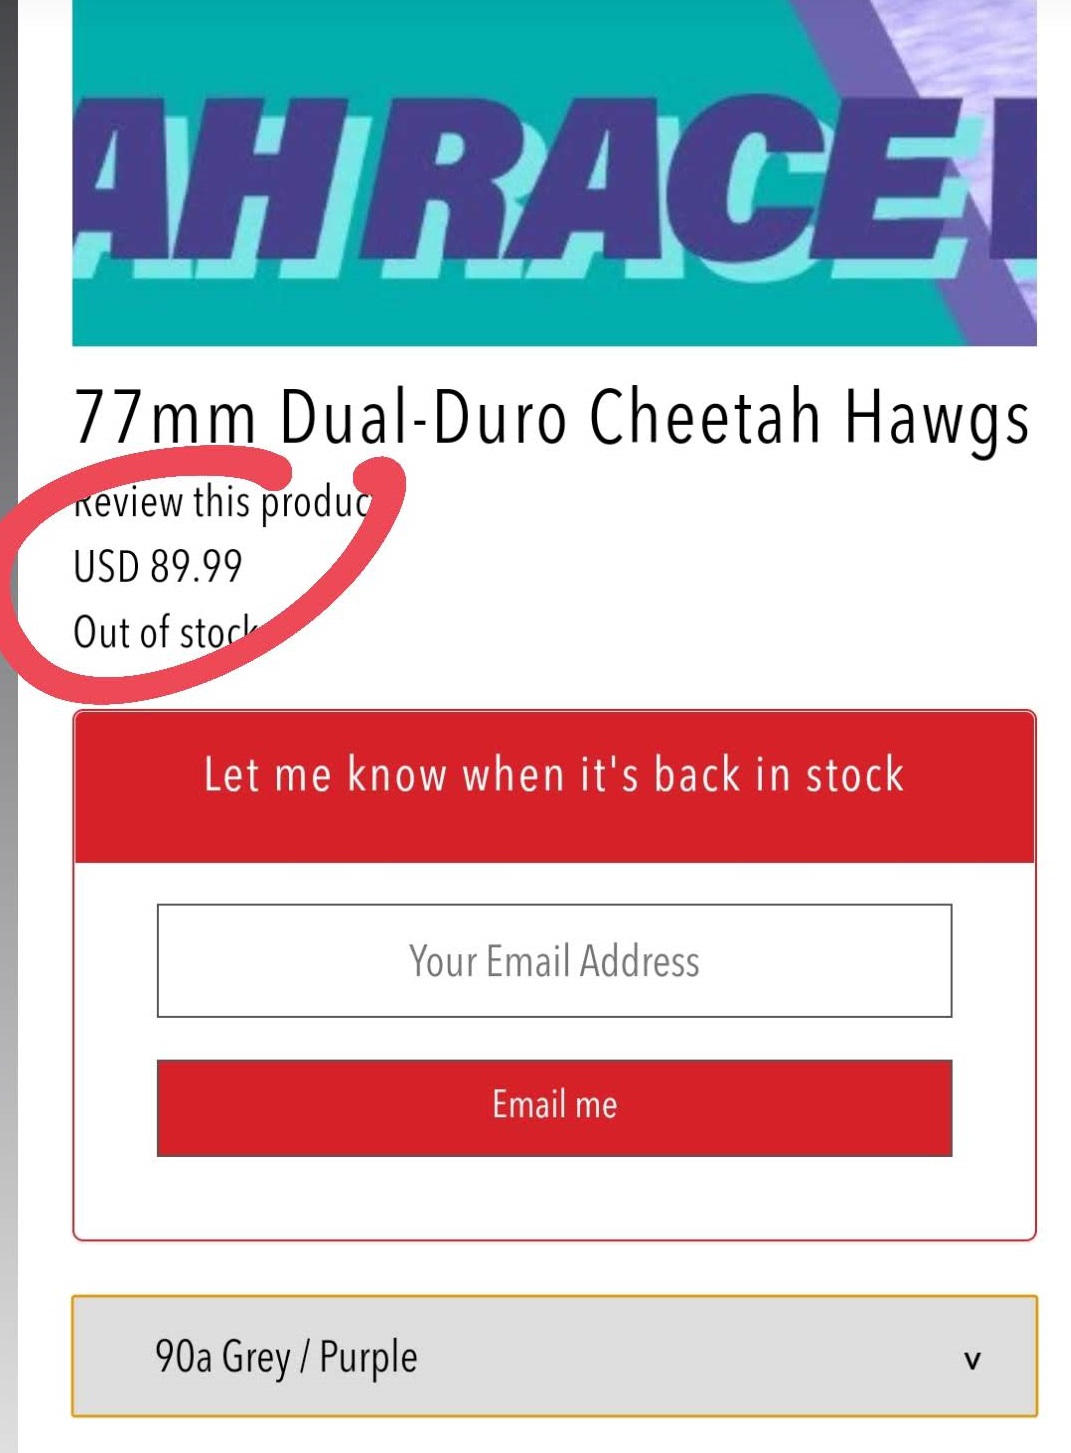 cheetah hawgs price